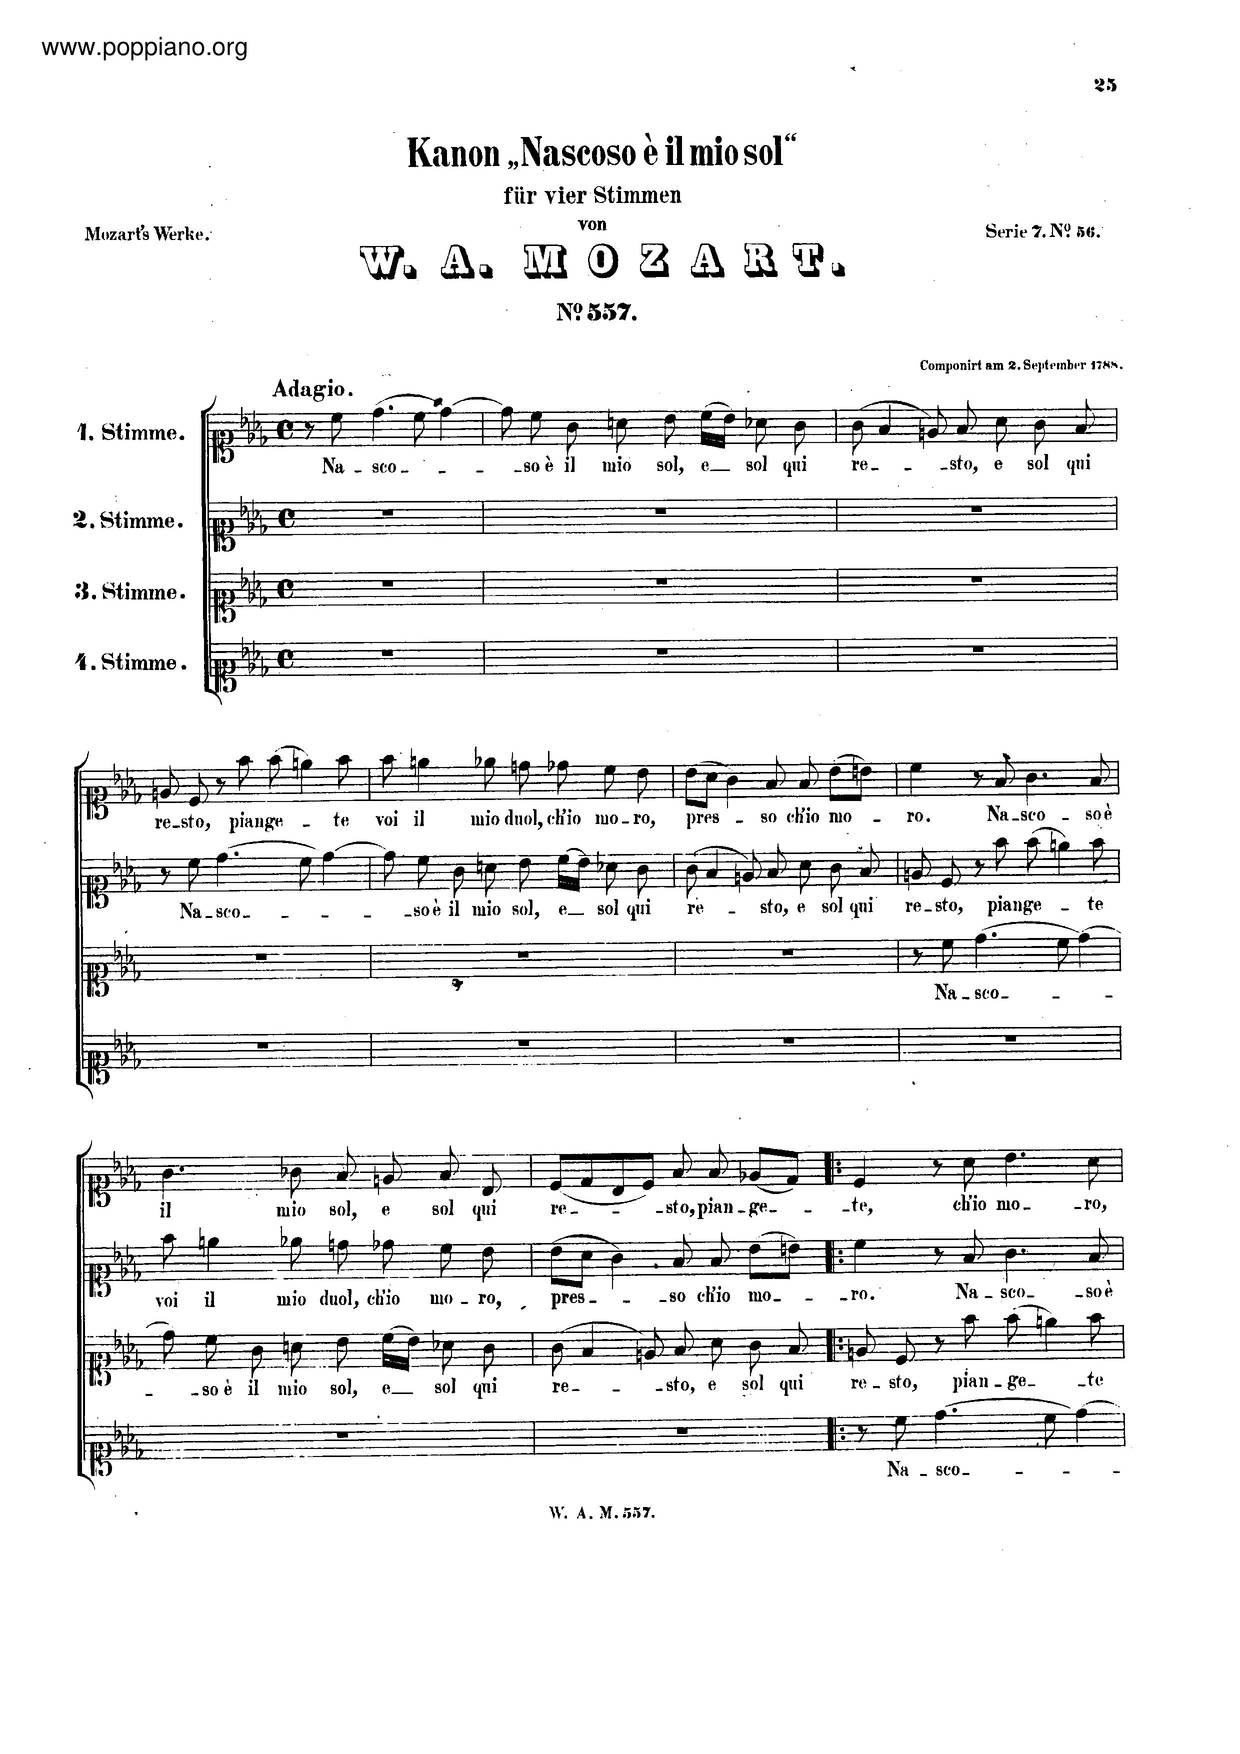 Canon For 4 Voices In F Minor, K. 557 Score